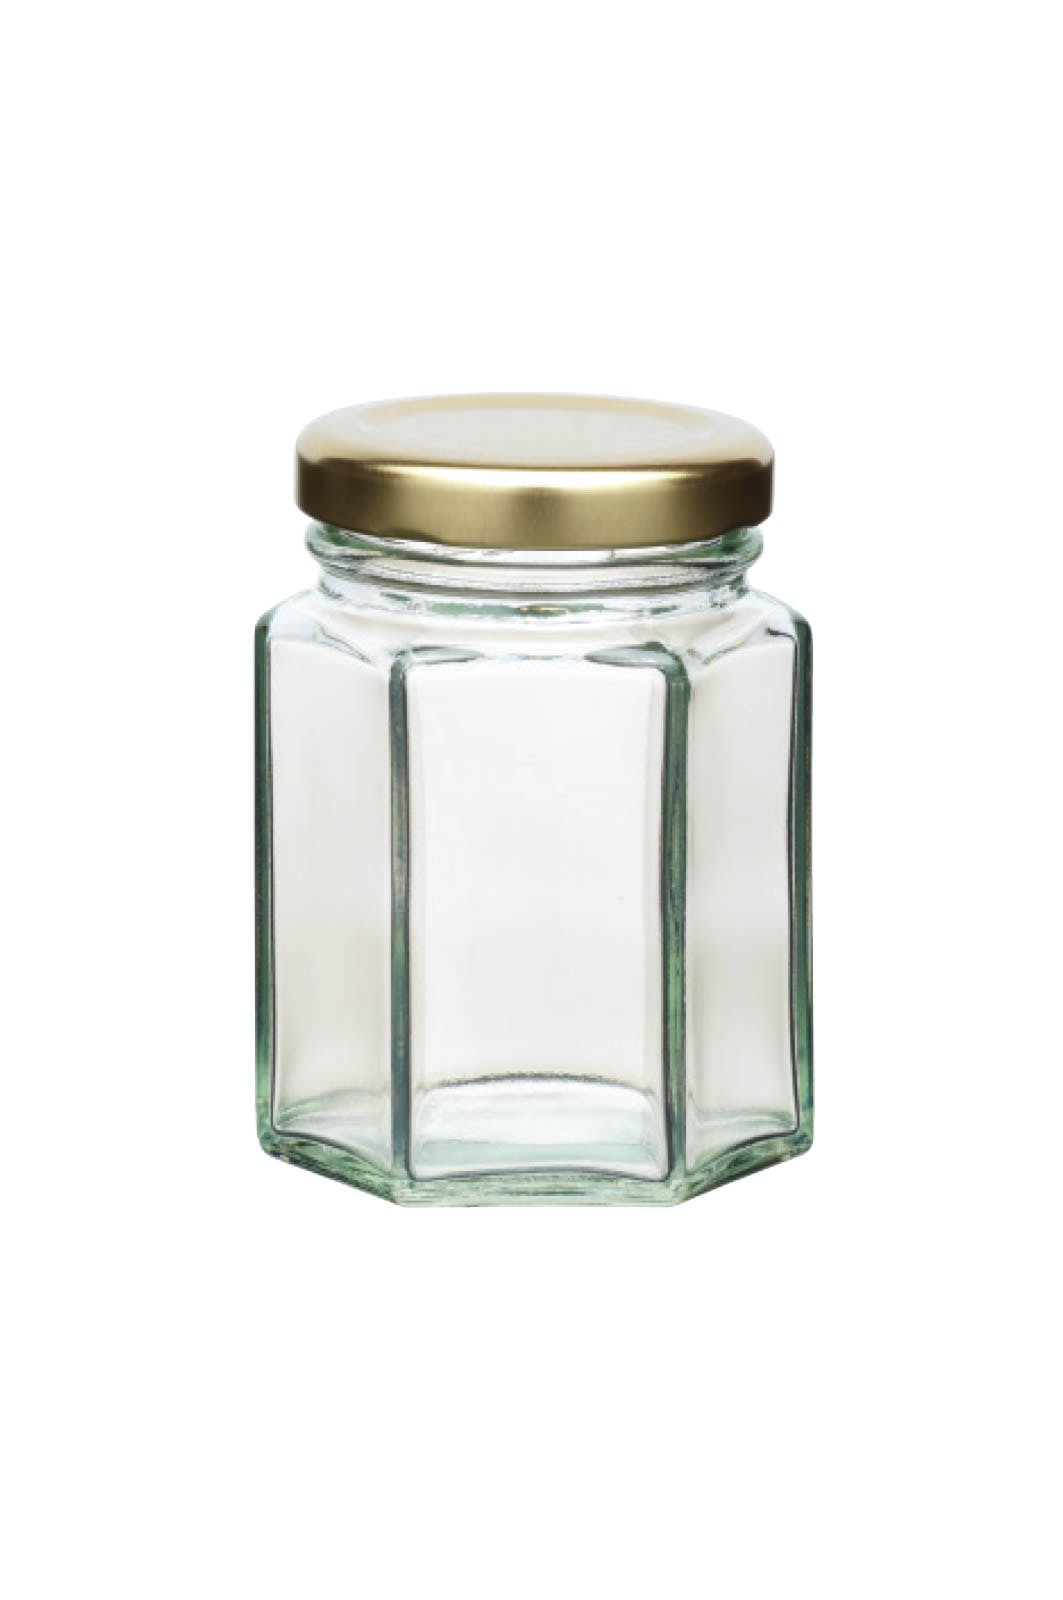 Home Made 110ml Hexagonal Jar with Twist-off Lid - The Cooks Cupboard Ltd